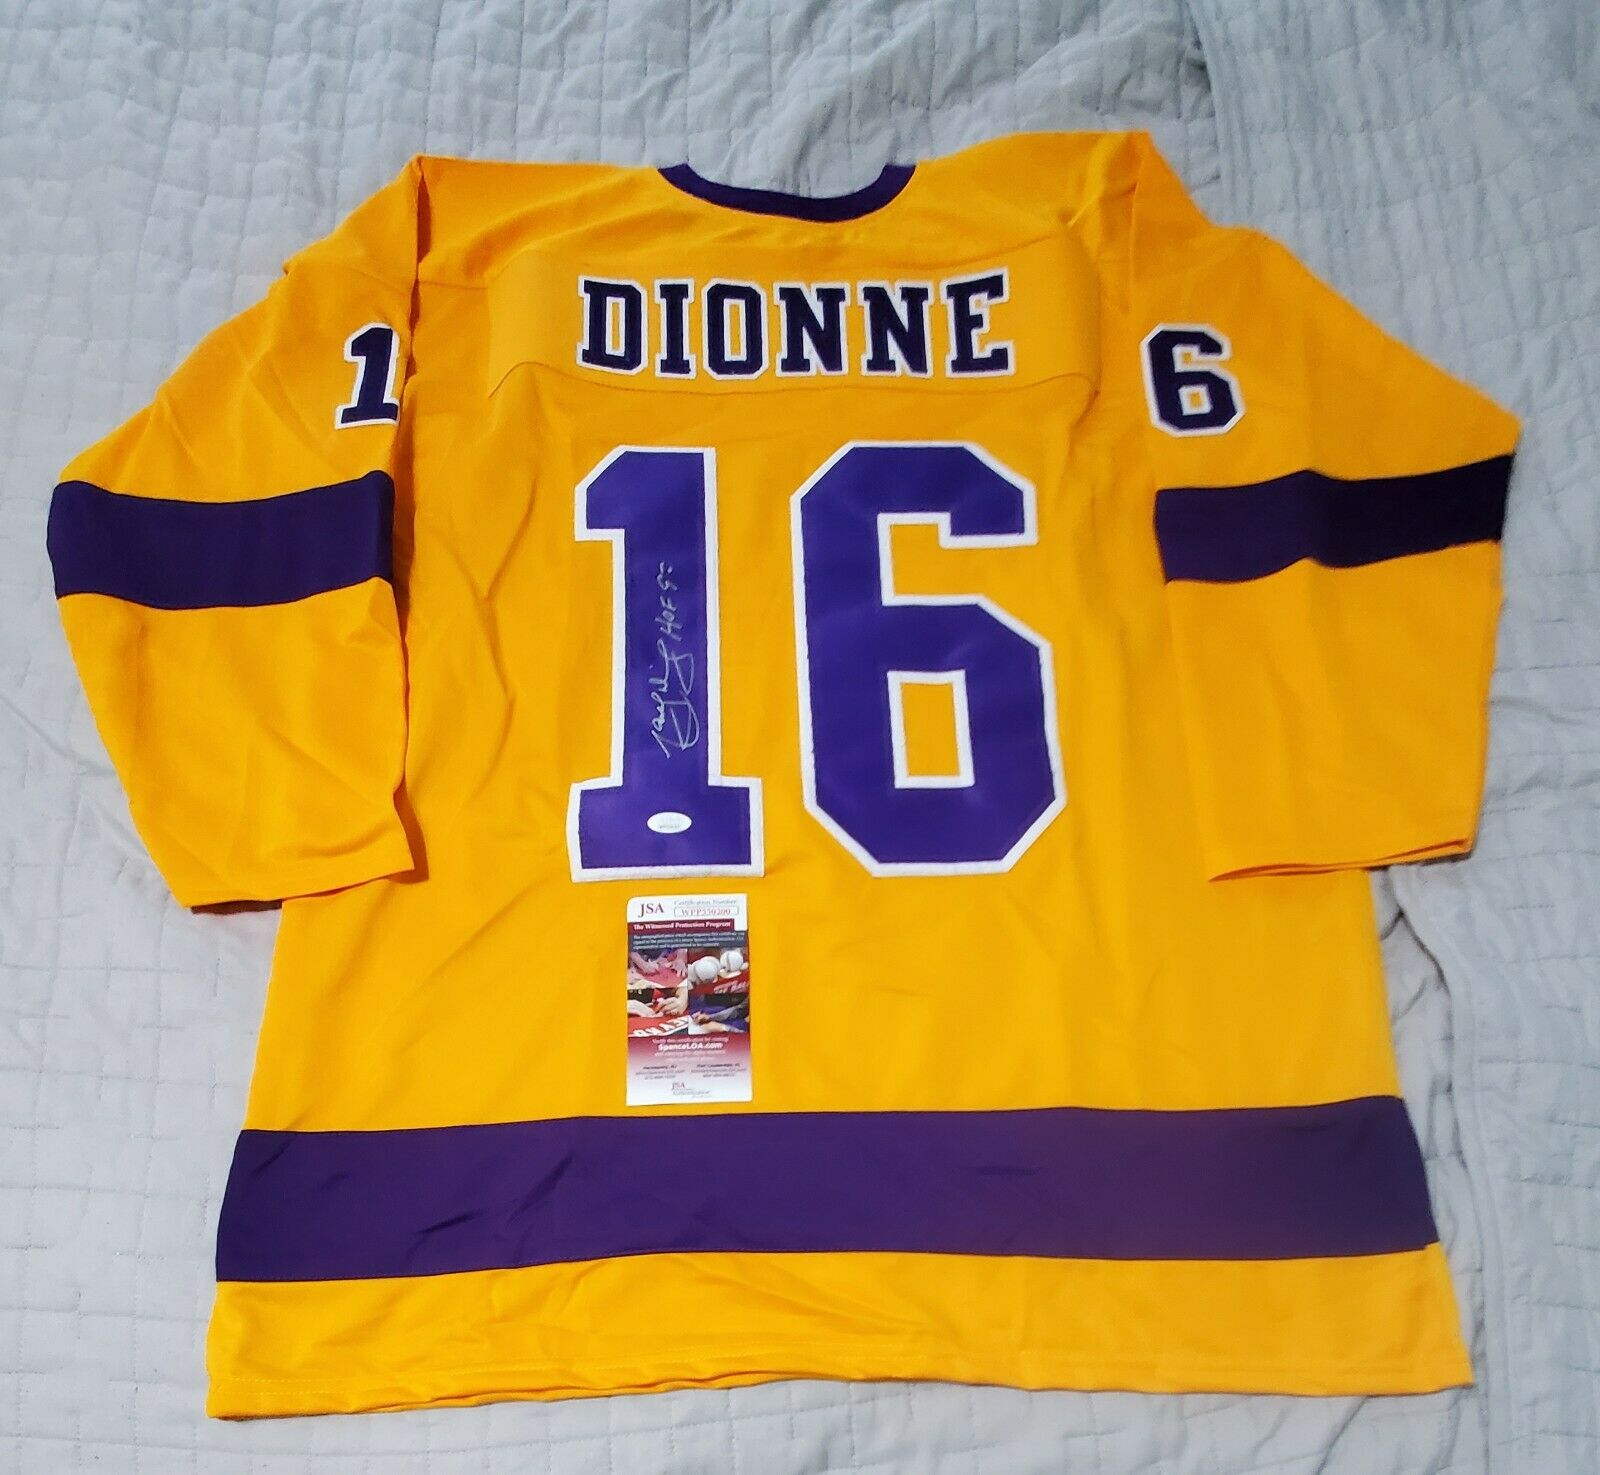 Kings Marcel Dionne Signed Autographed Hockey Jersey Jsa Coa Size Xl